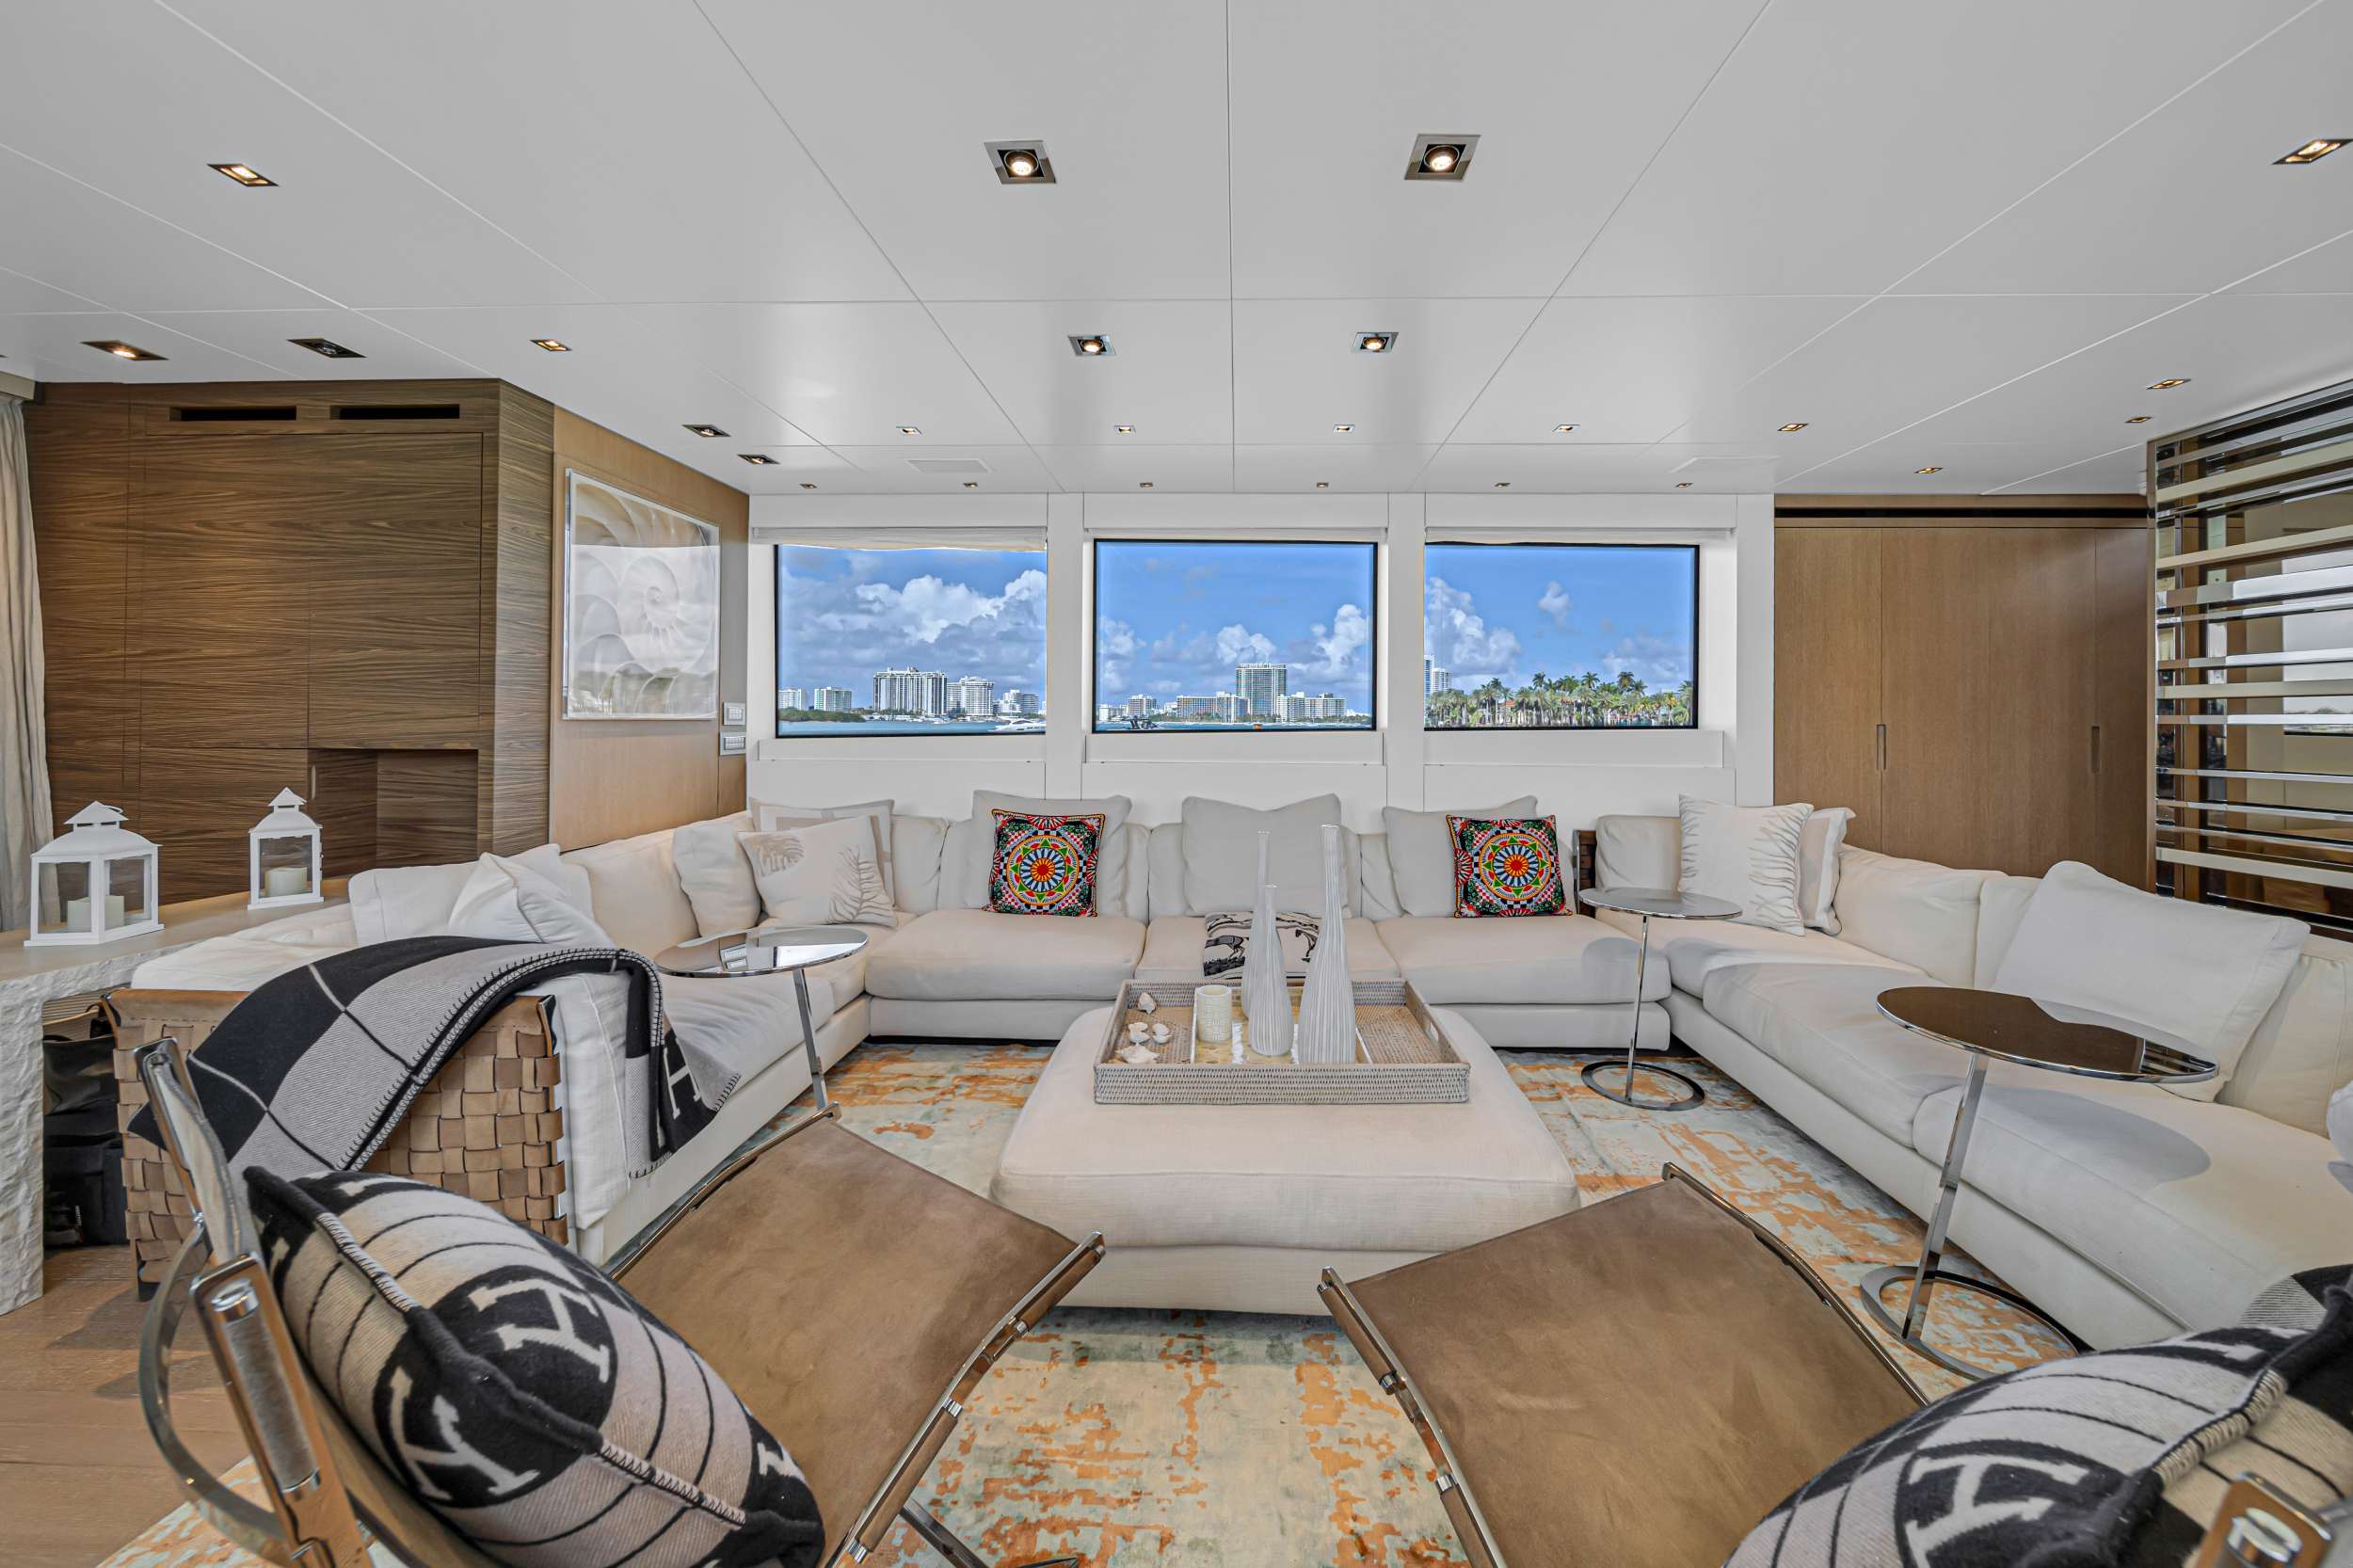 Astonish - Yacht Charter Florida & Boat hire in Florida & Bahamas 2